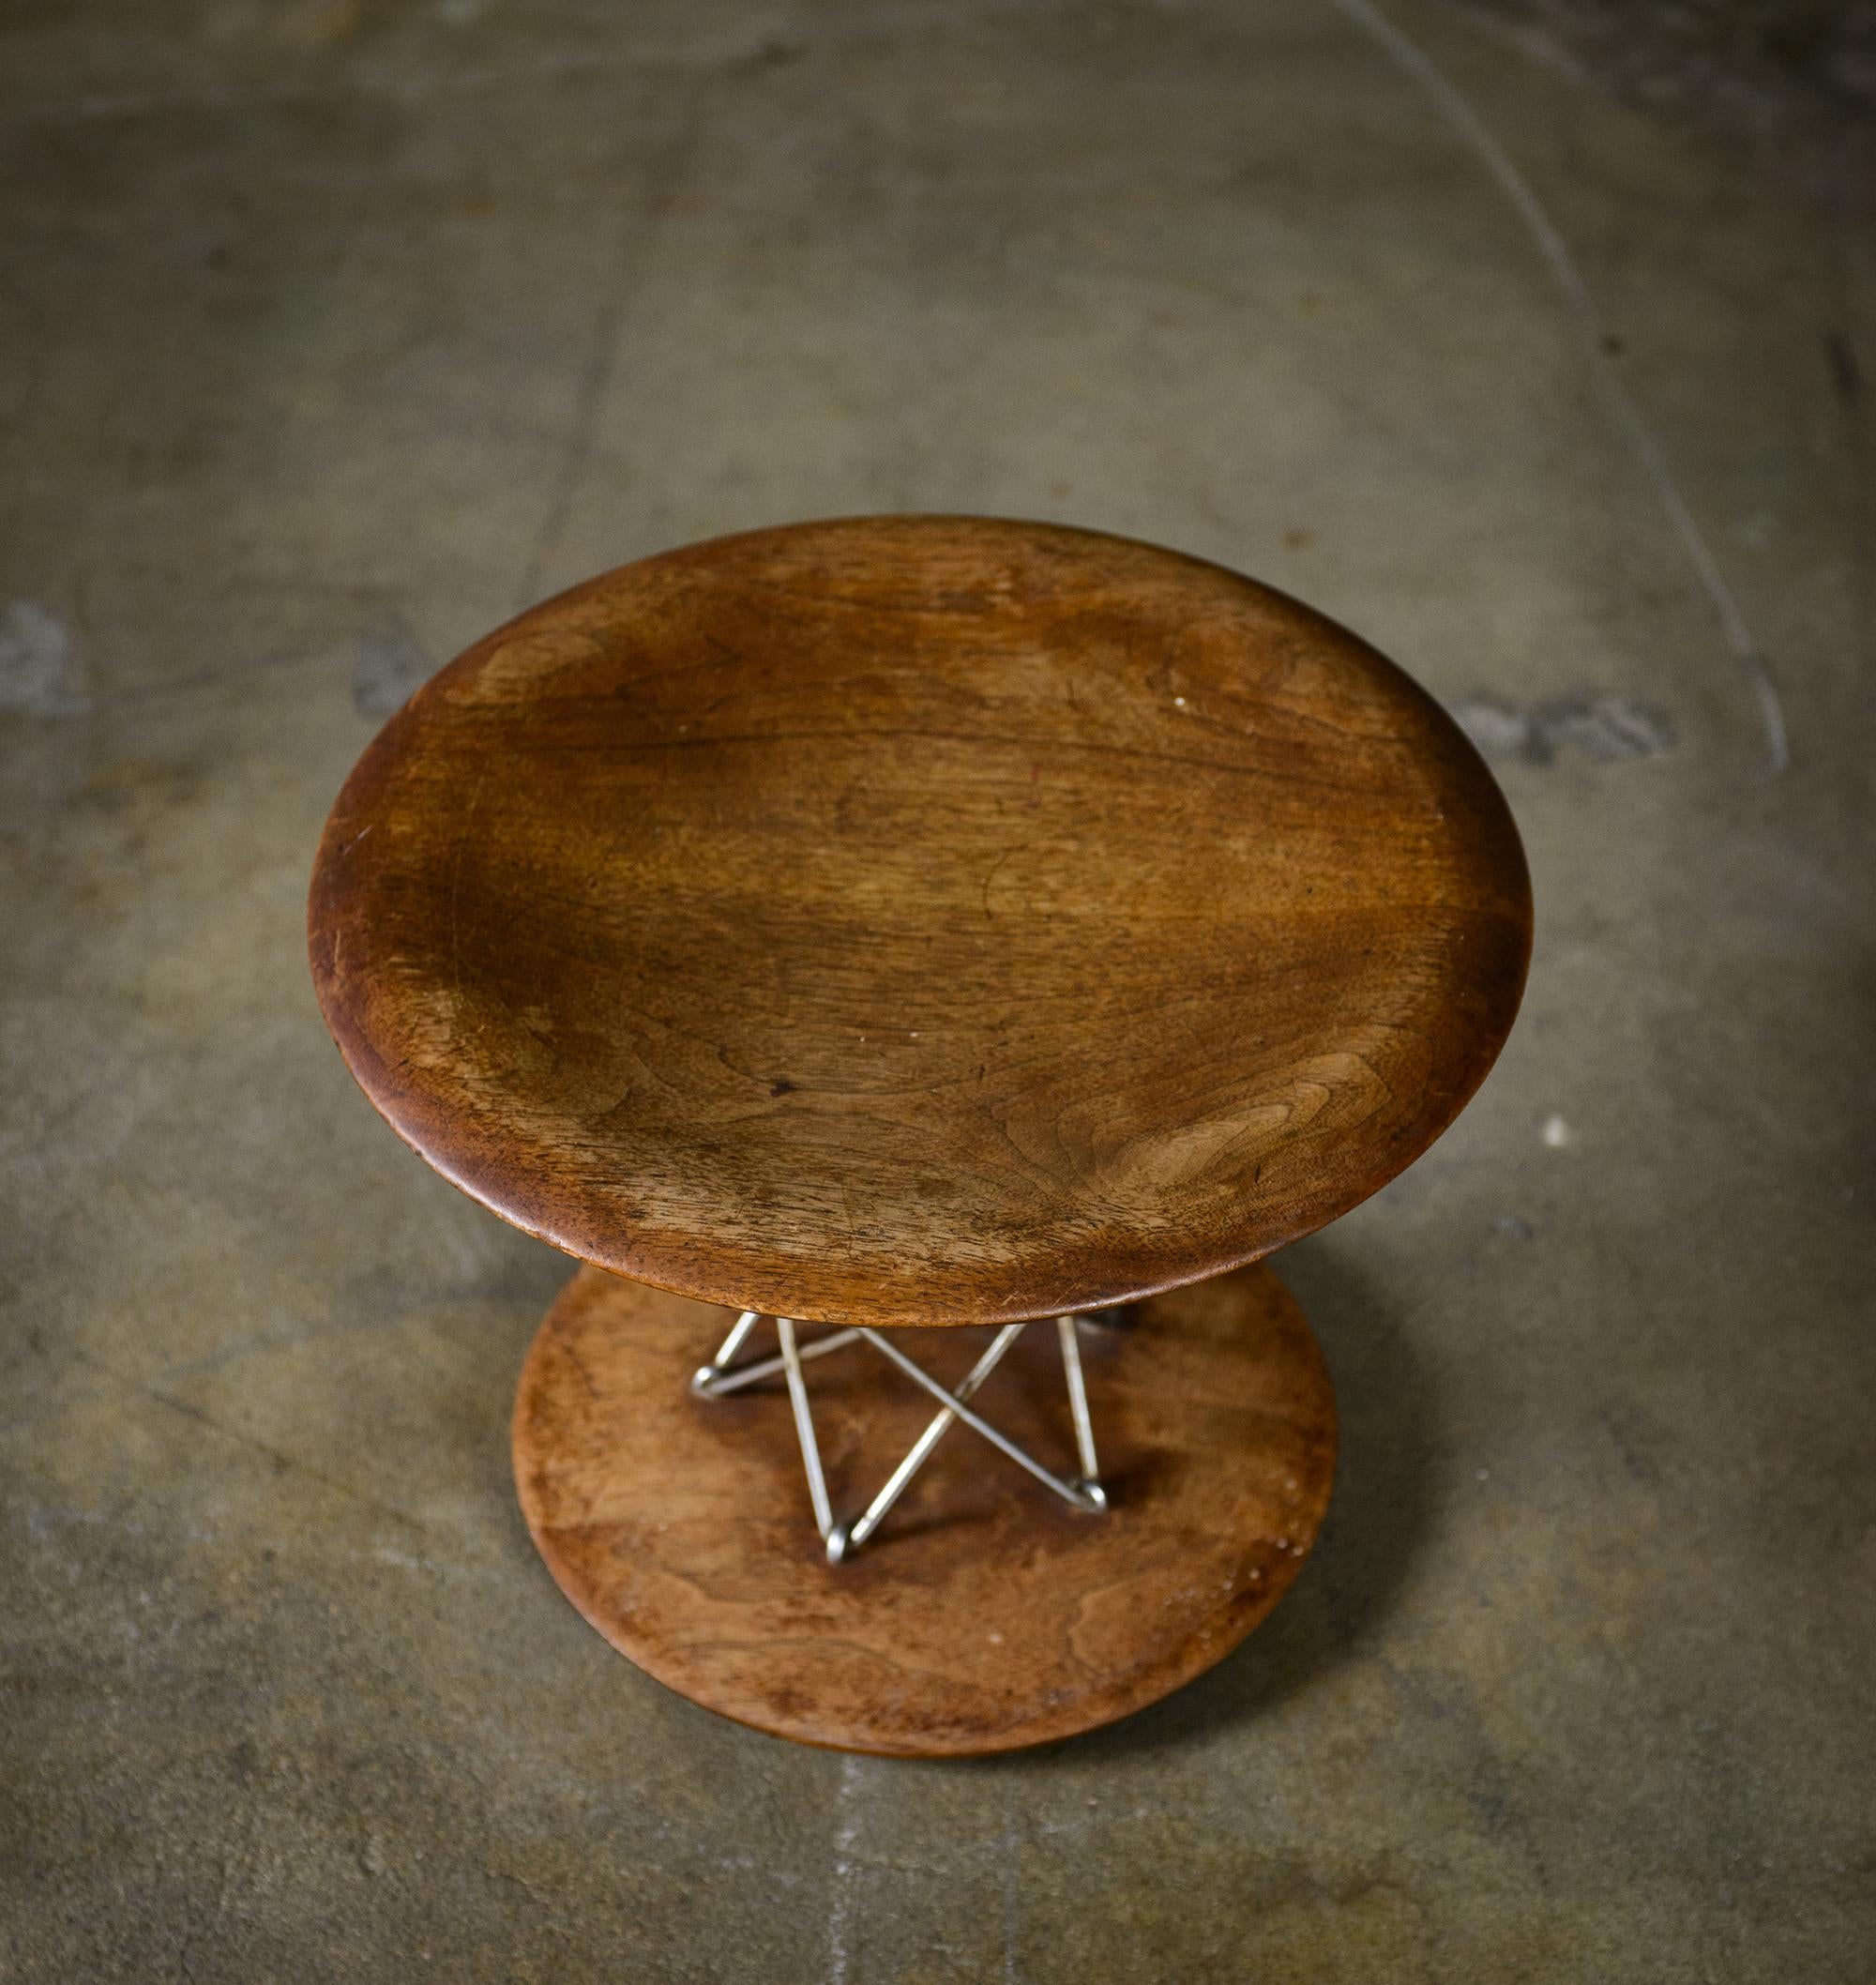 United States: Rocking stool by Isamu Noguchi; manufactured by Knoll Inc., 1955.